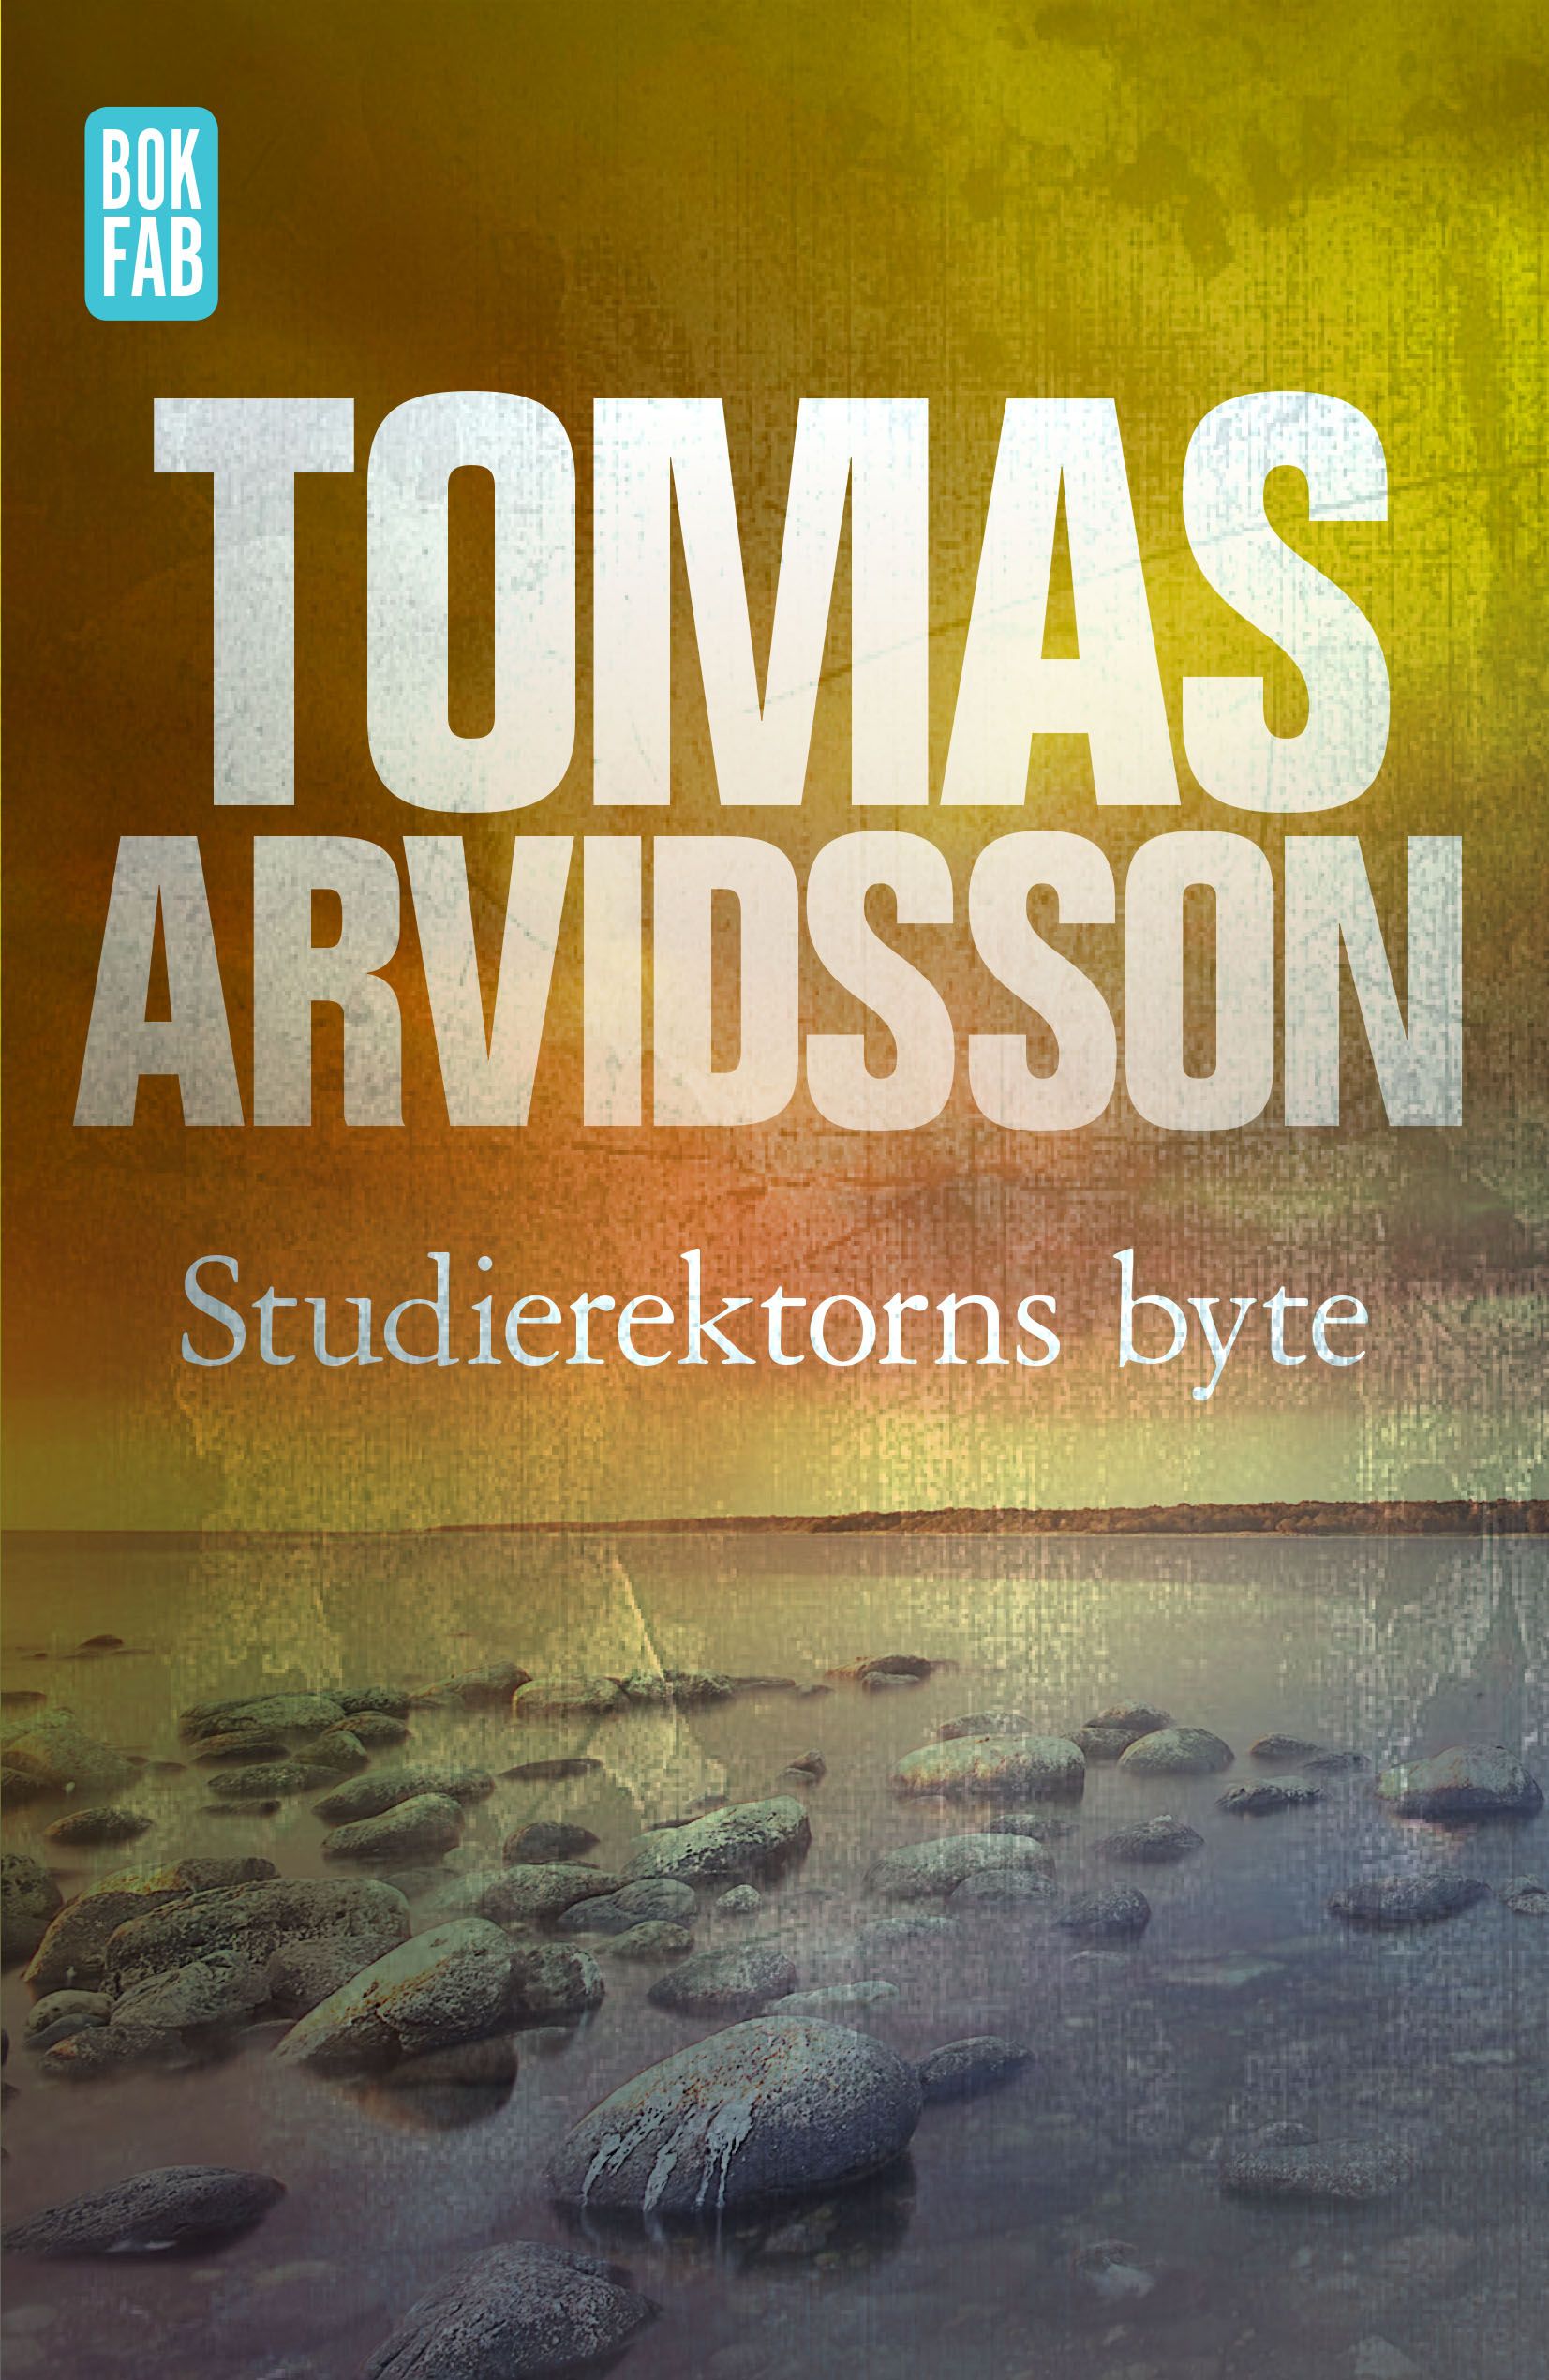 Studierektorns byte, eBook by Tomas Arvidsson